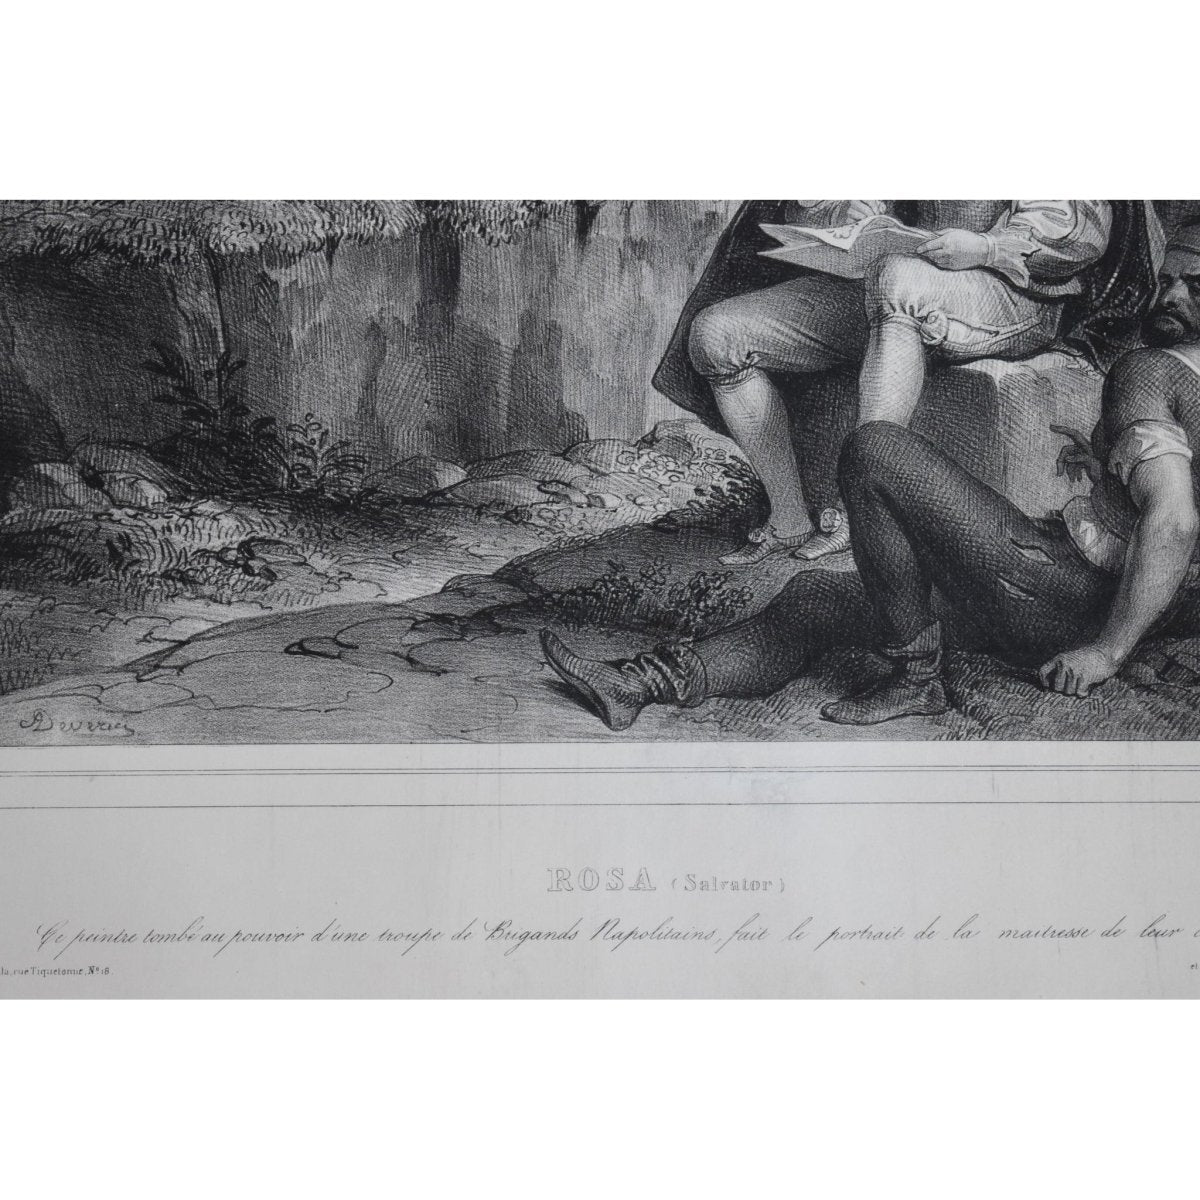 Antique lithograph Salvator Rosa italian bandits scene original 1838 by Acchille Deveria for sale at Winckelmann Gallery